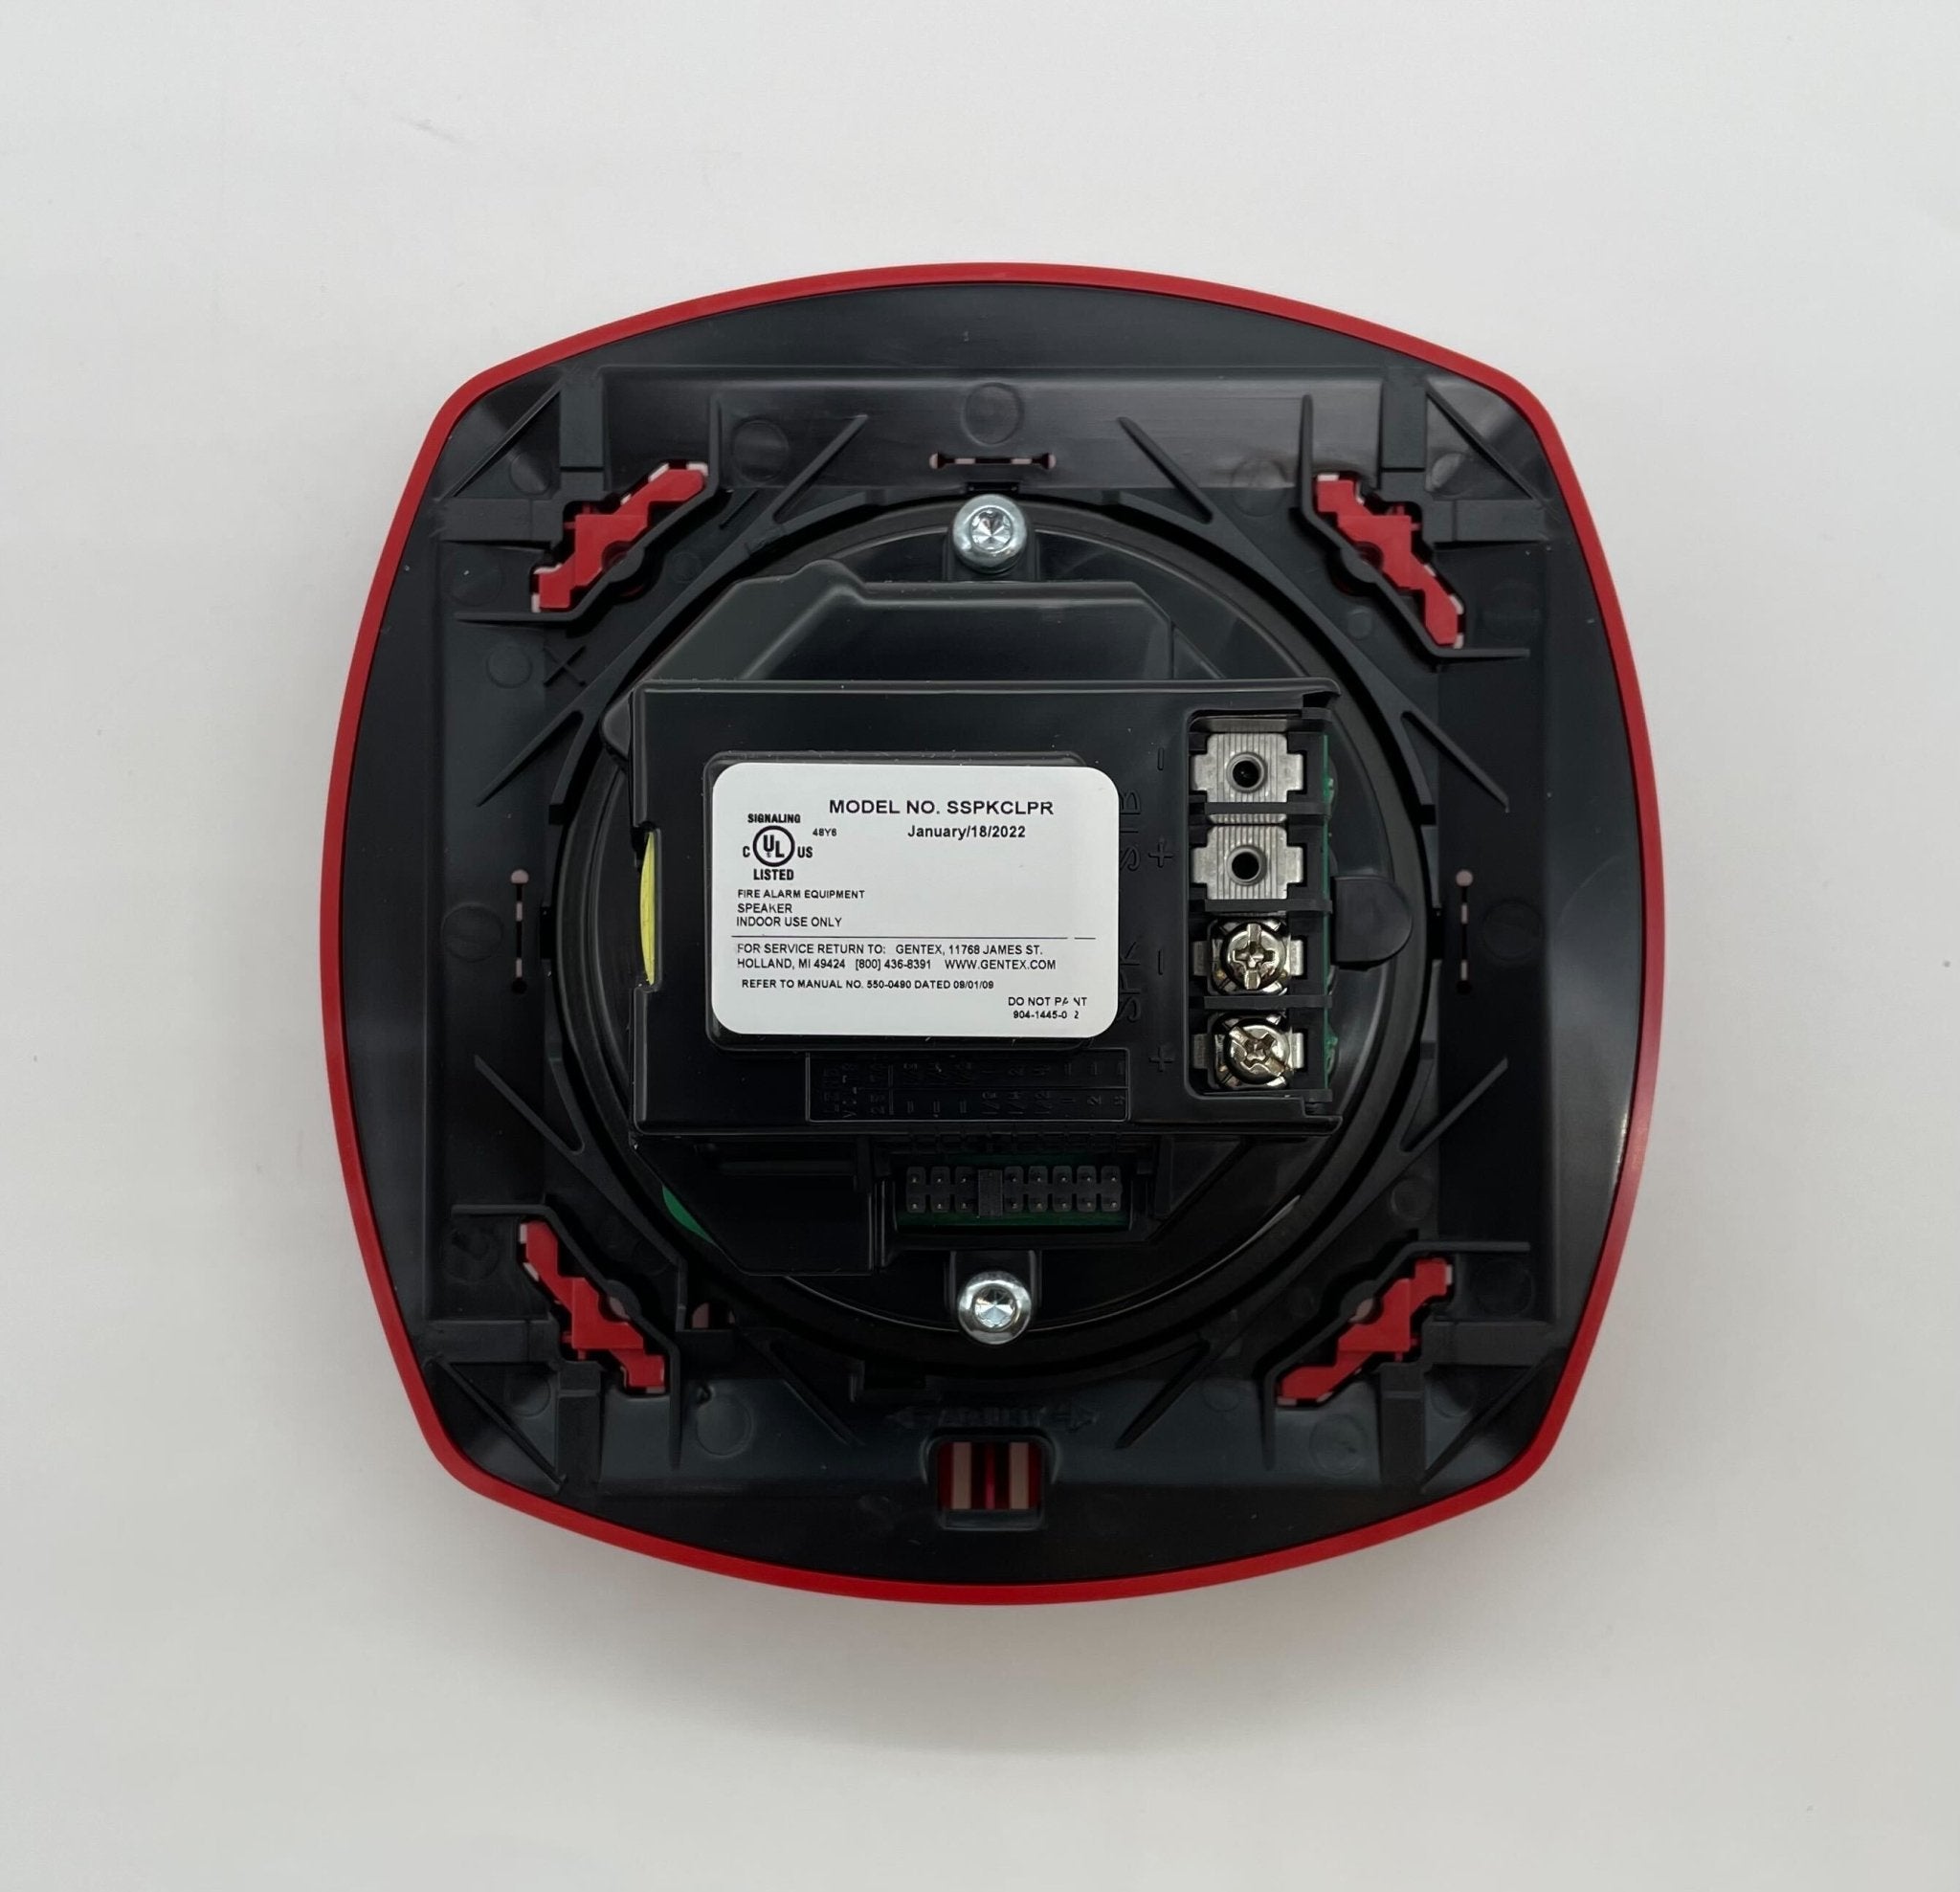 Gentex SSPKCLPR - The Fire Alarm Supplier